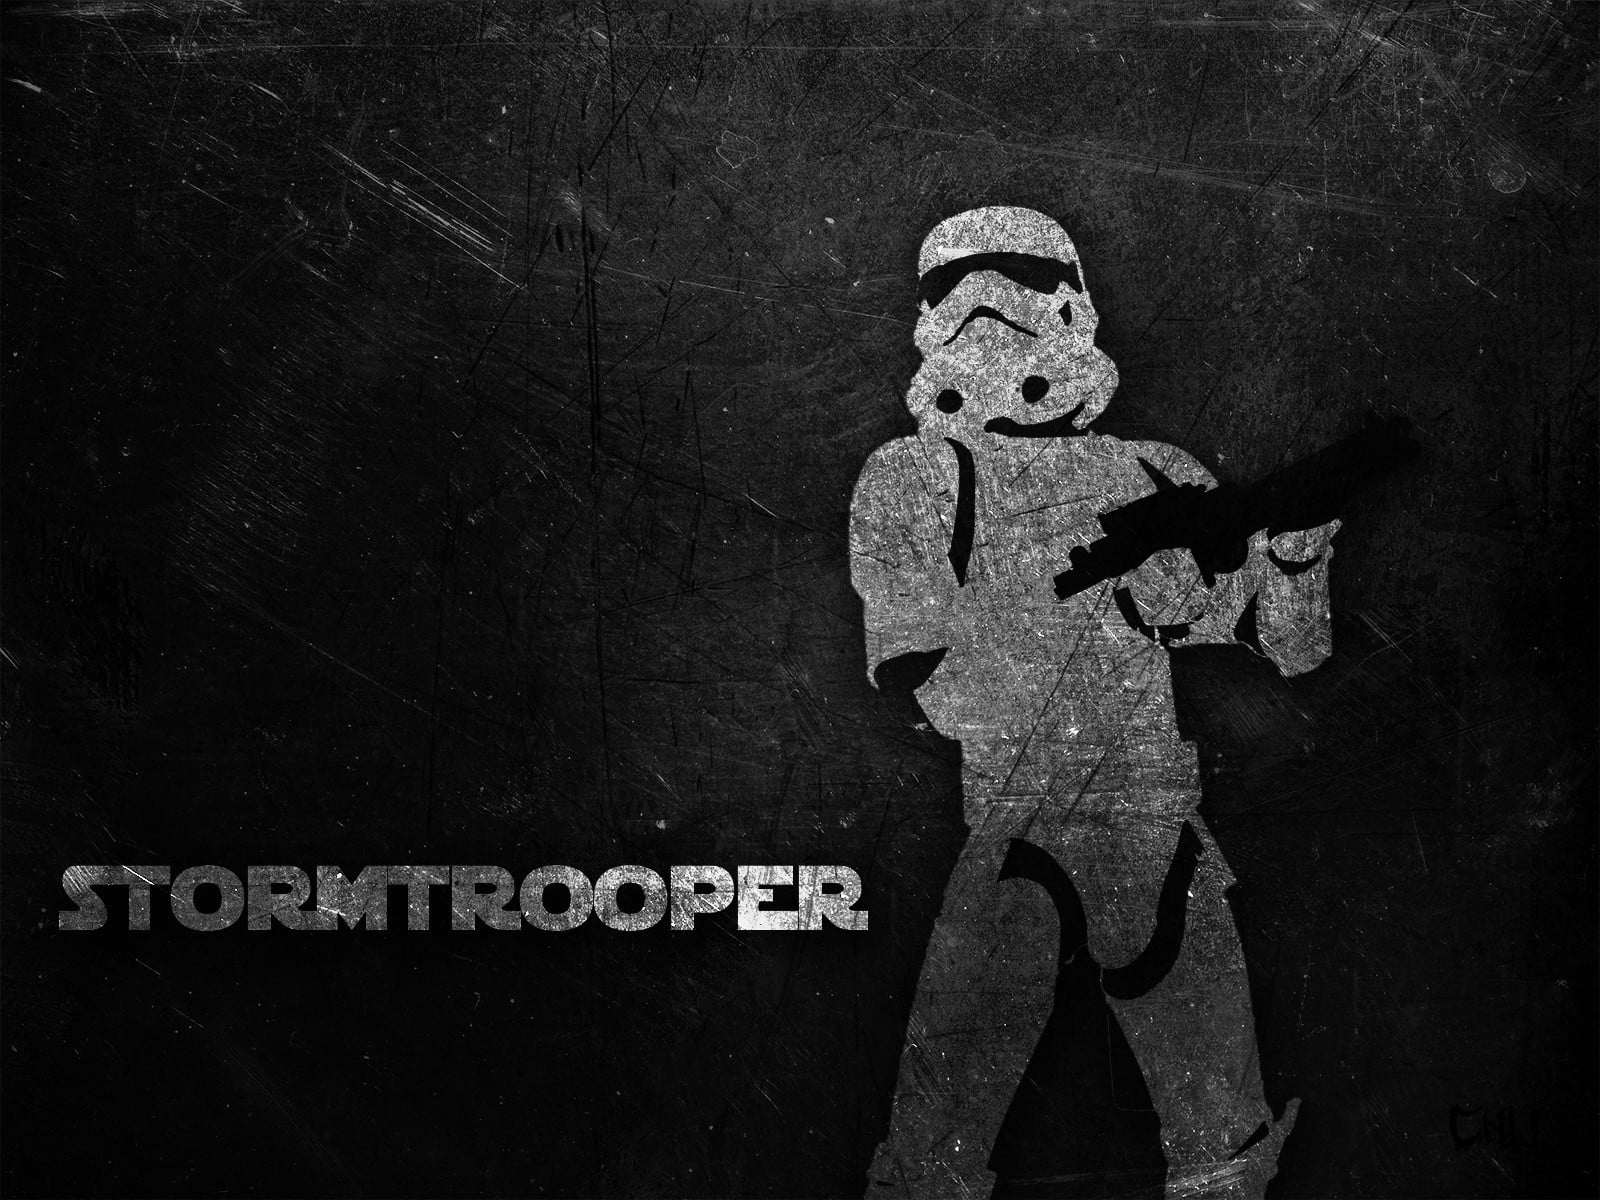 StormTrooper of Star Wars wallpaper, Star Wars, stormtrooper, armor, gun